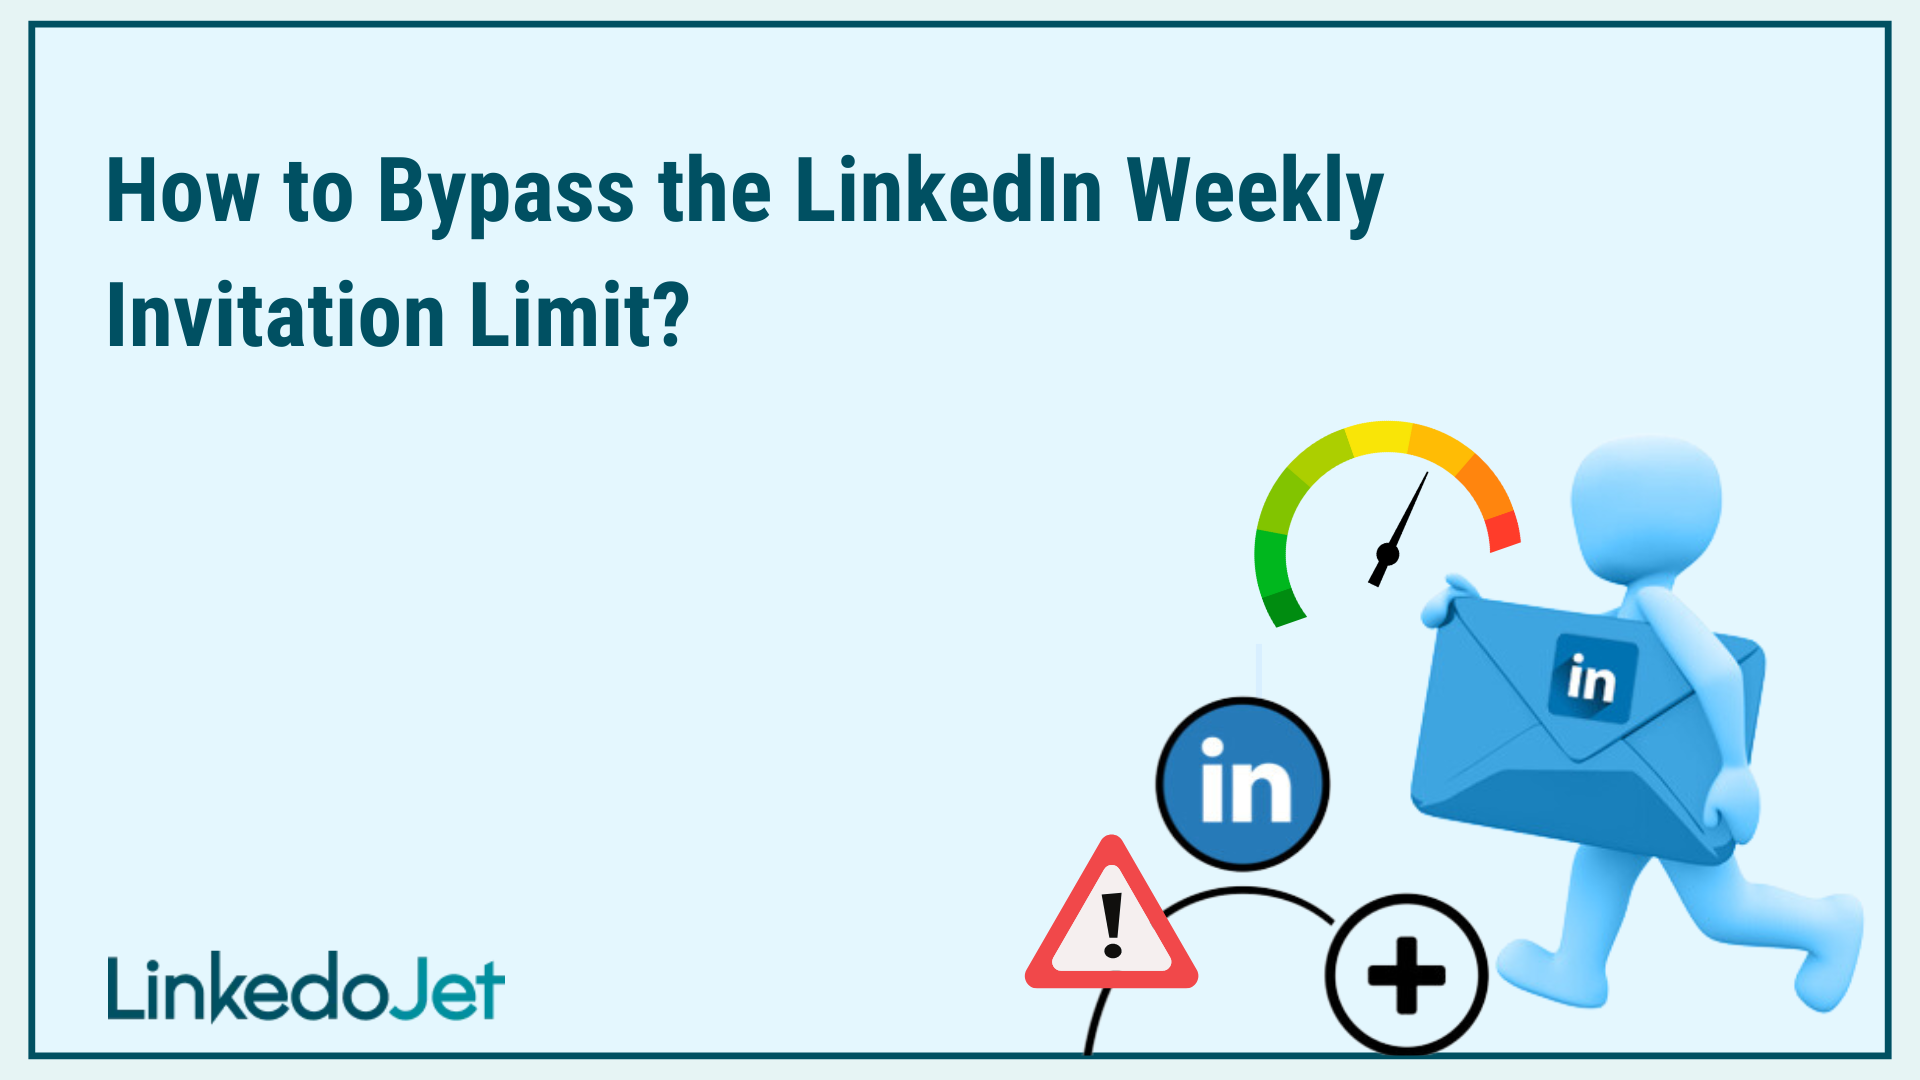 LinkedIn weekly invitation limit